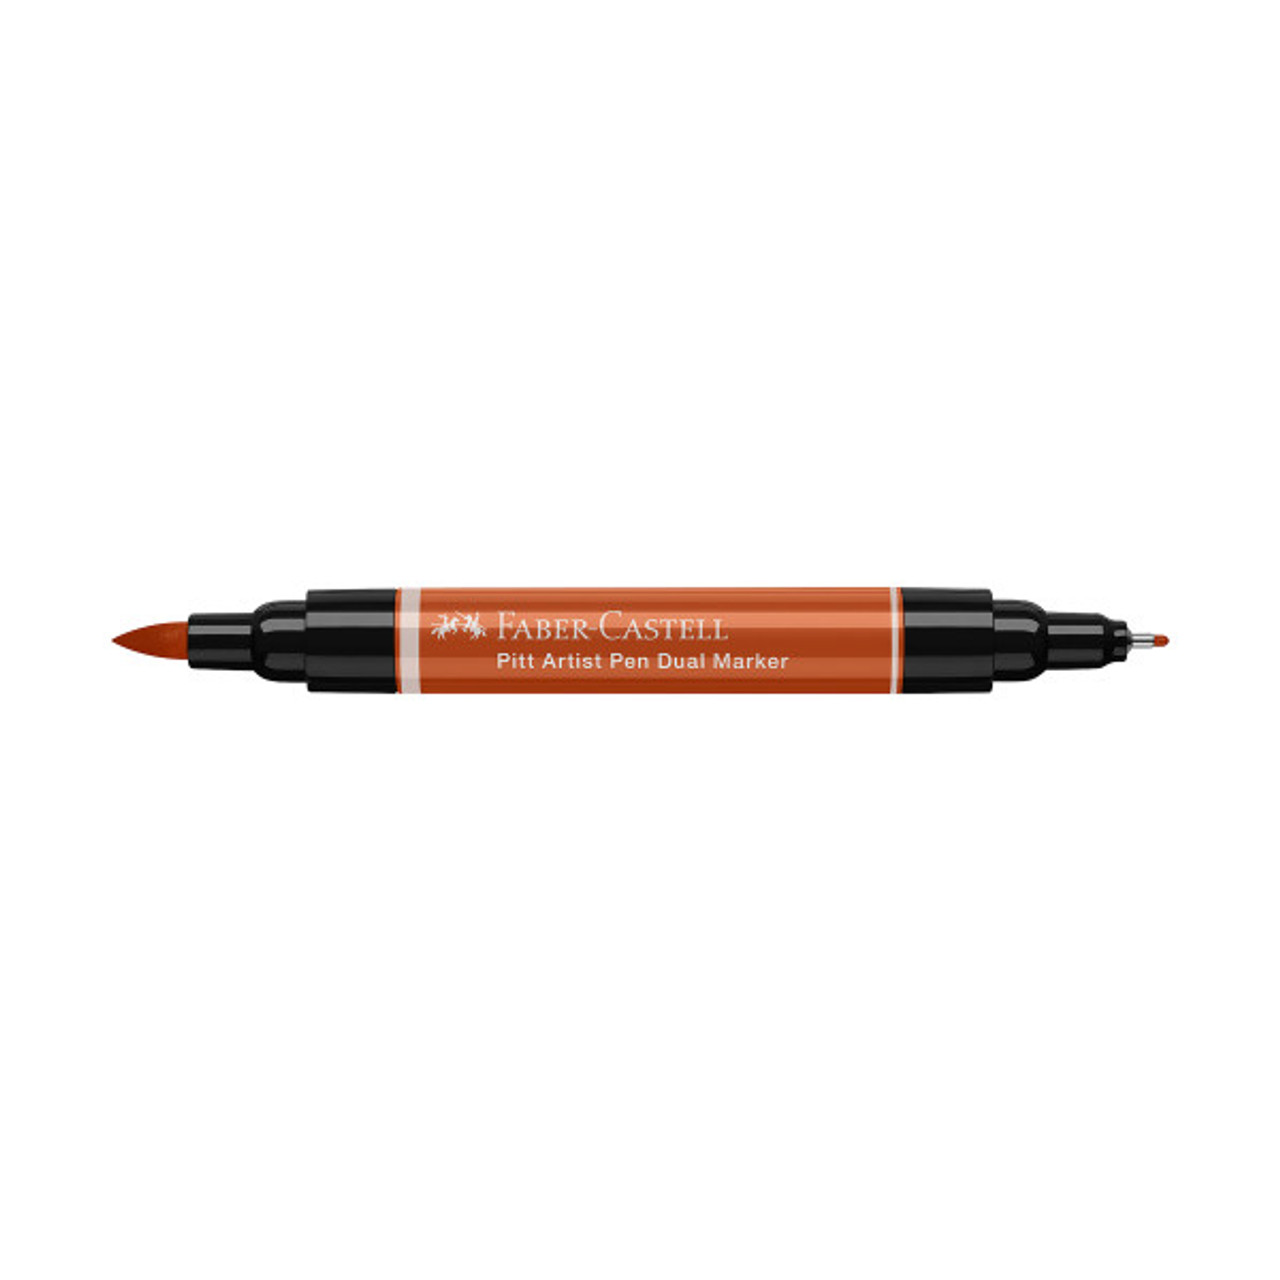 188 Sanguine - Buy 4, Get 1 Free - Pitt Artist Pen Dual Marker - Faber Castell